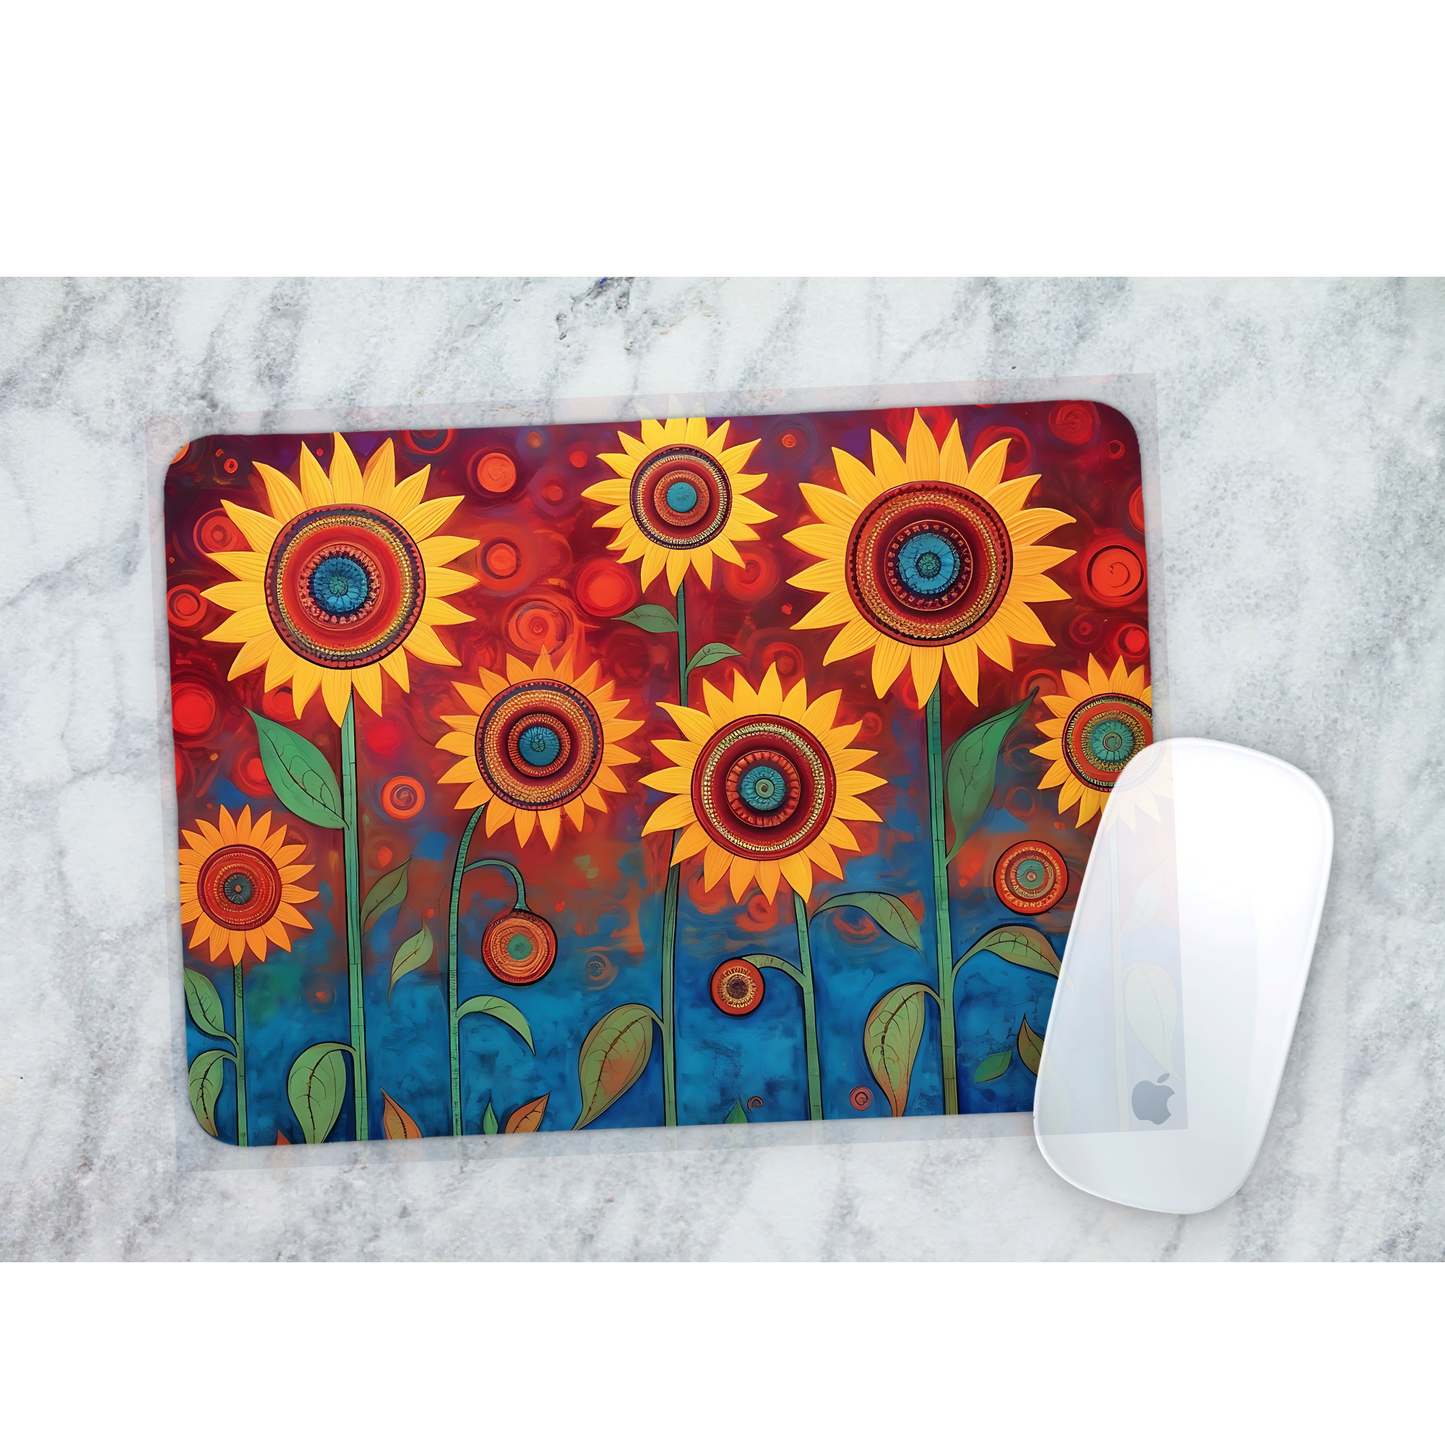 Premium Printed Anti-Slip Mouse Mat - Ultra Durable Folk Art Sunflowers Design